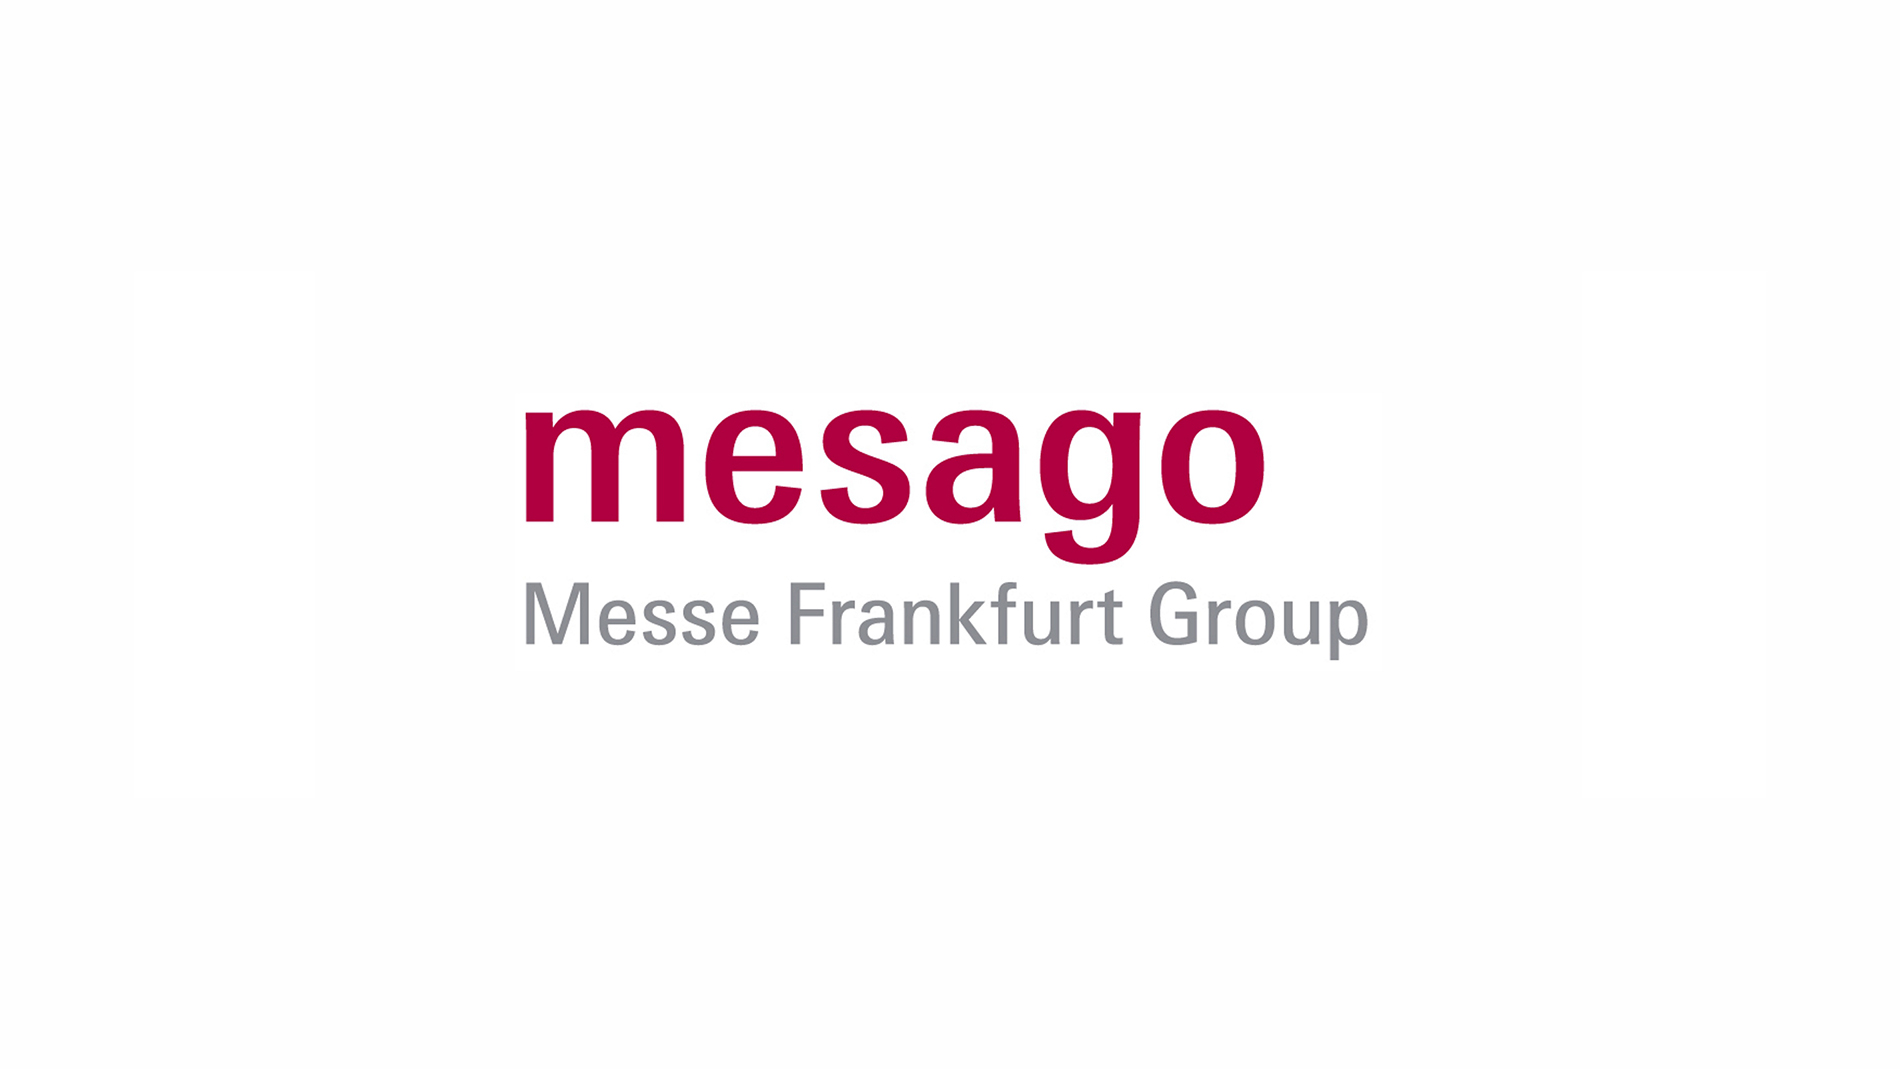 Full program of the Mesago Mese Frankfurt GmbH